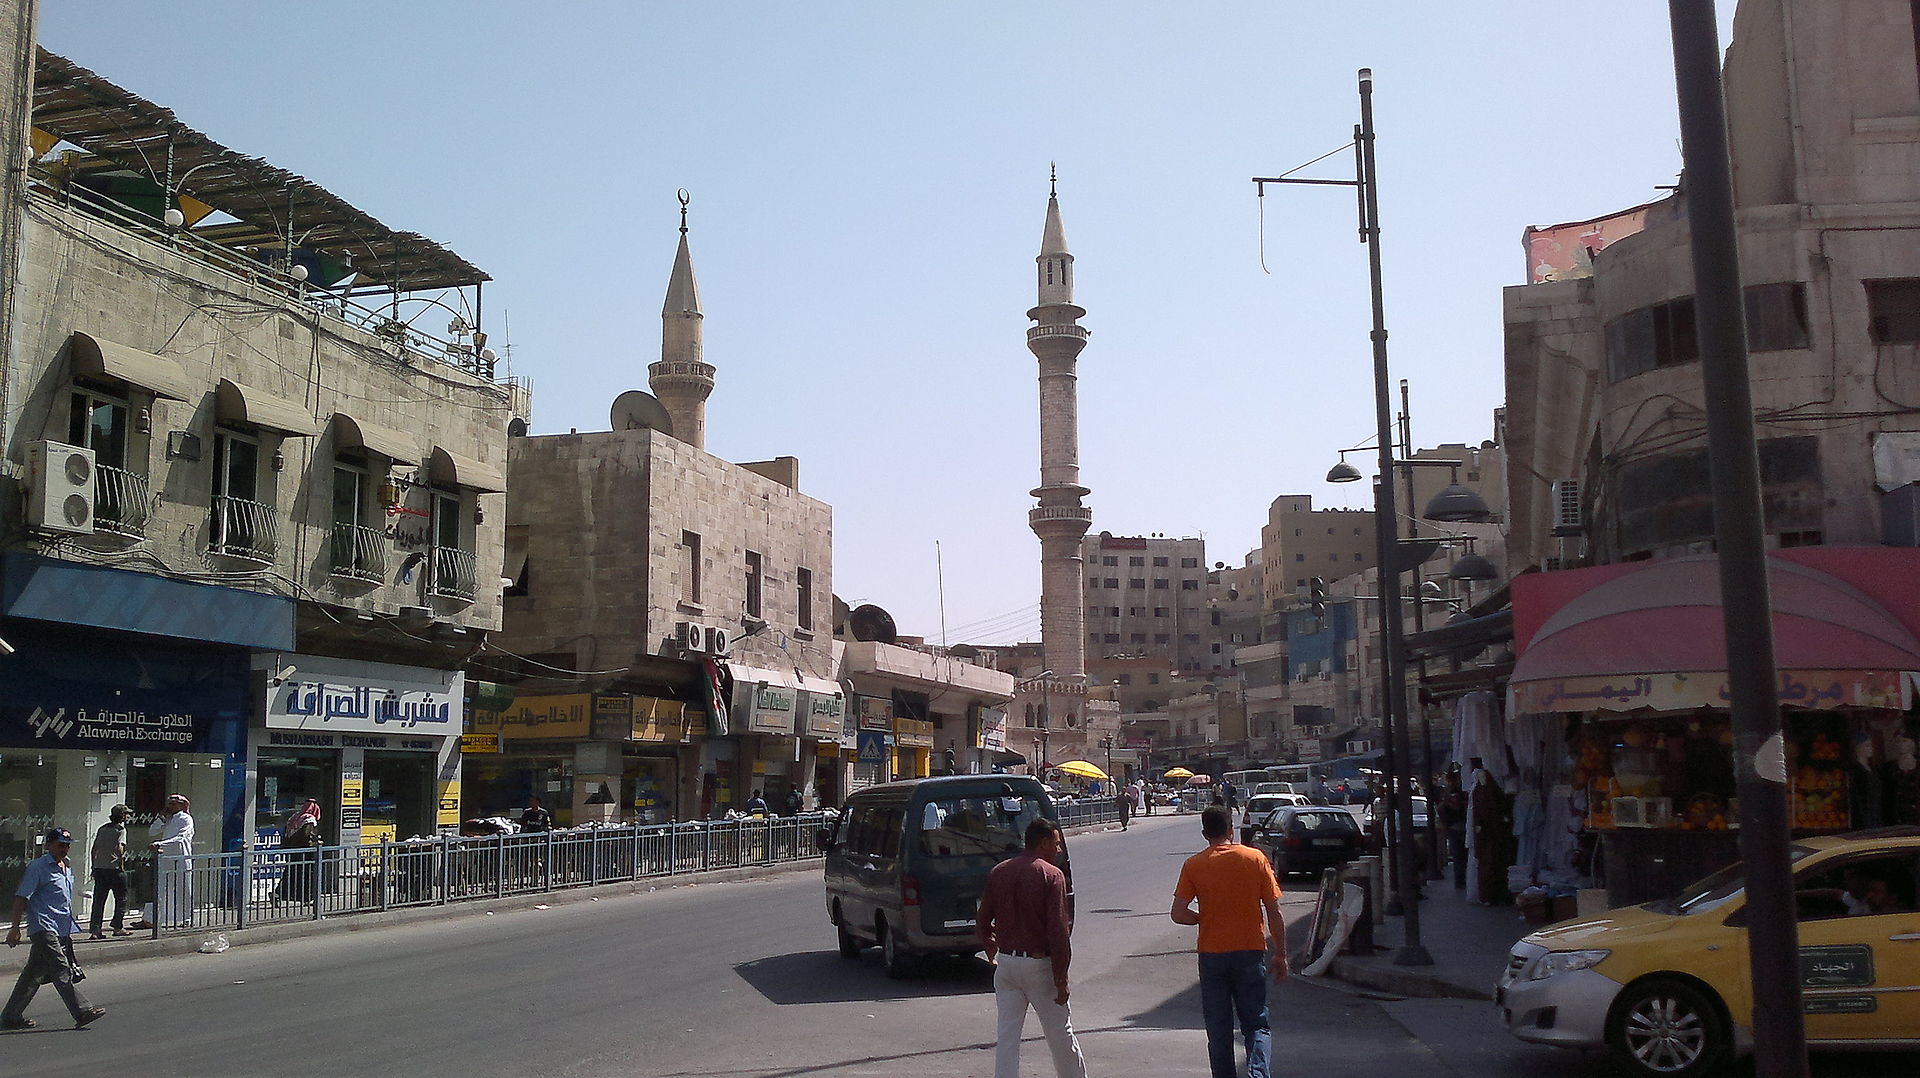 Husseini Mosque in downtown Amman, Jordan (photo: Freedom's Falcon, Creative Commons)